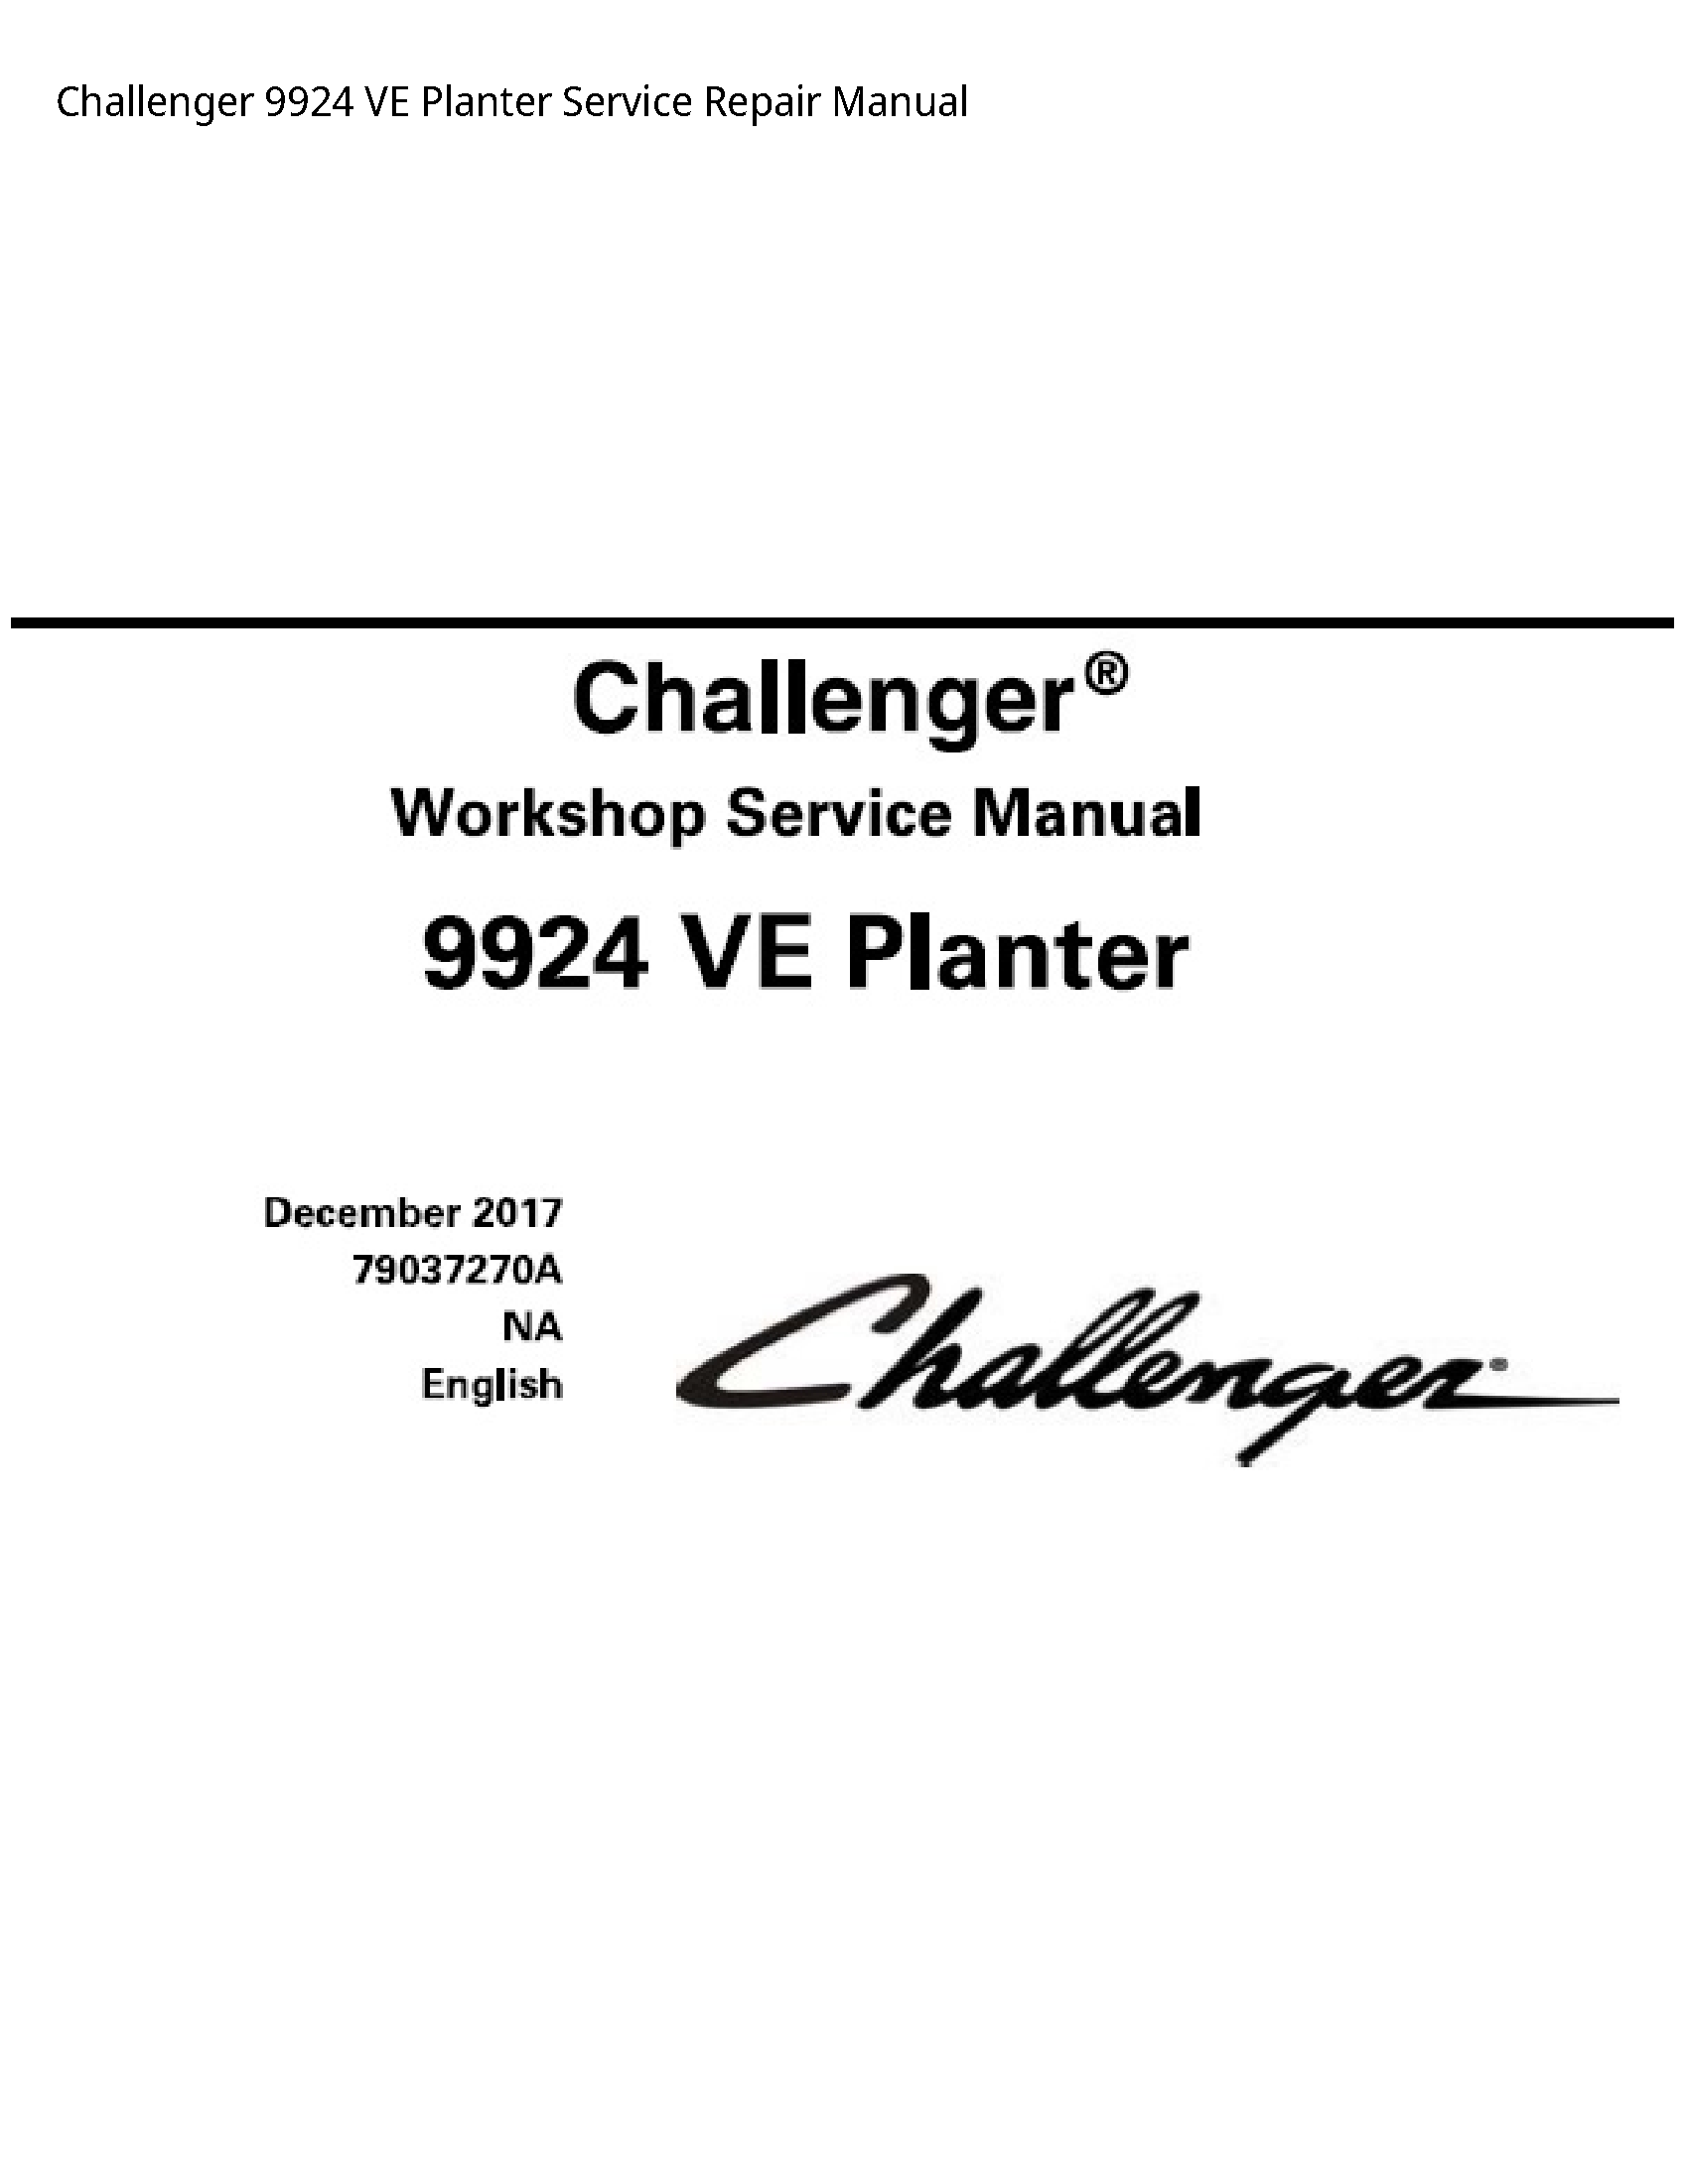 Challenger 9924 VE Planter manual